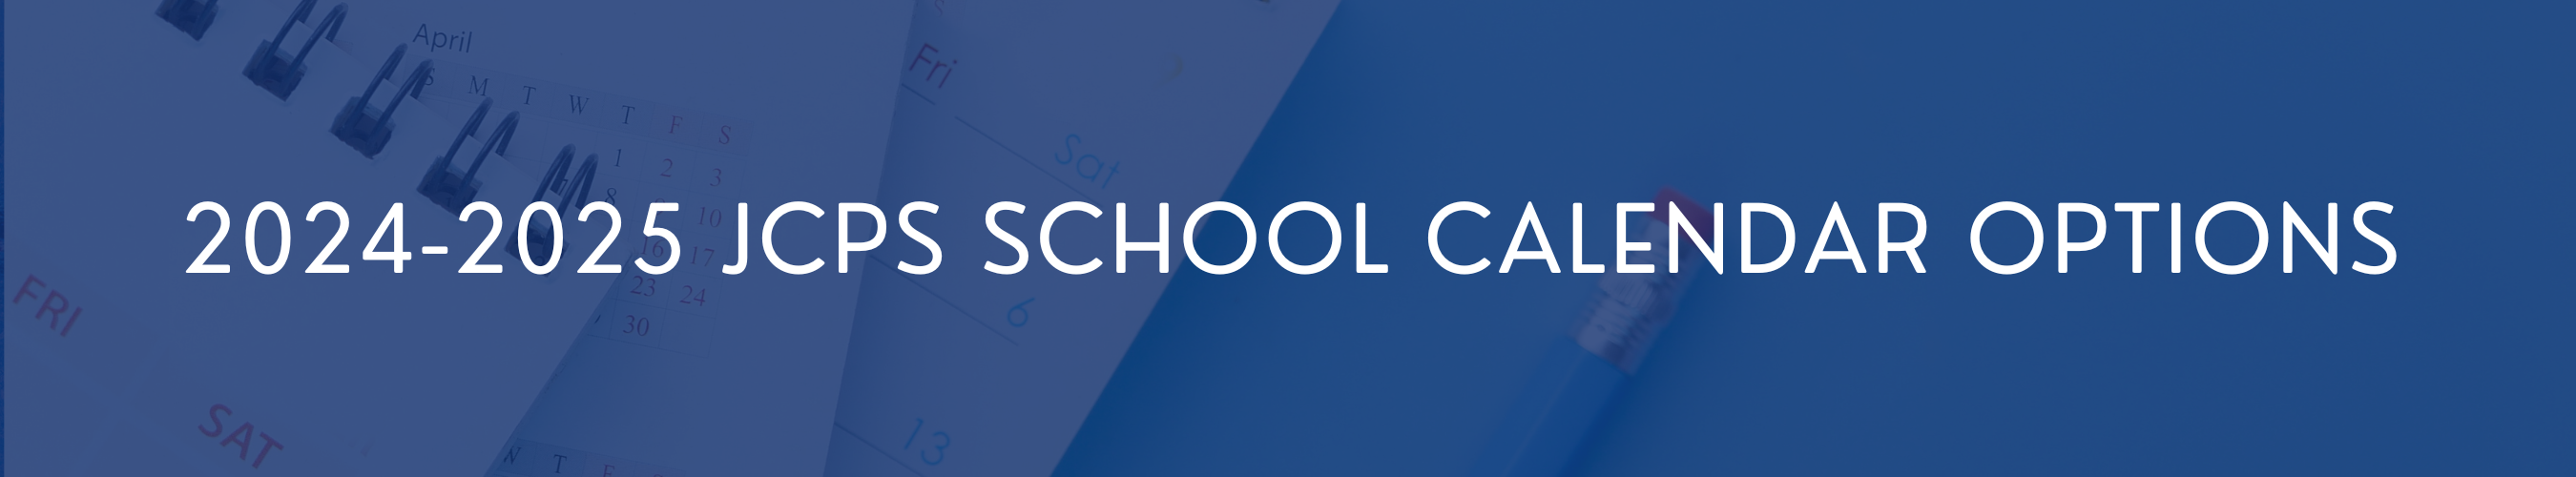 2024-2025 JCPS School Calendar Options | Johnston County Public Schools